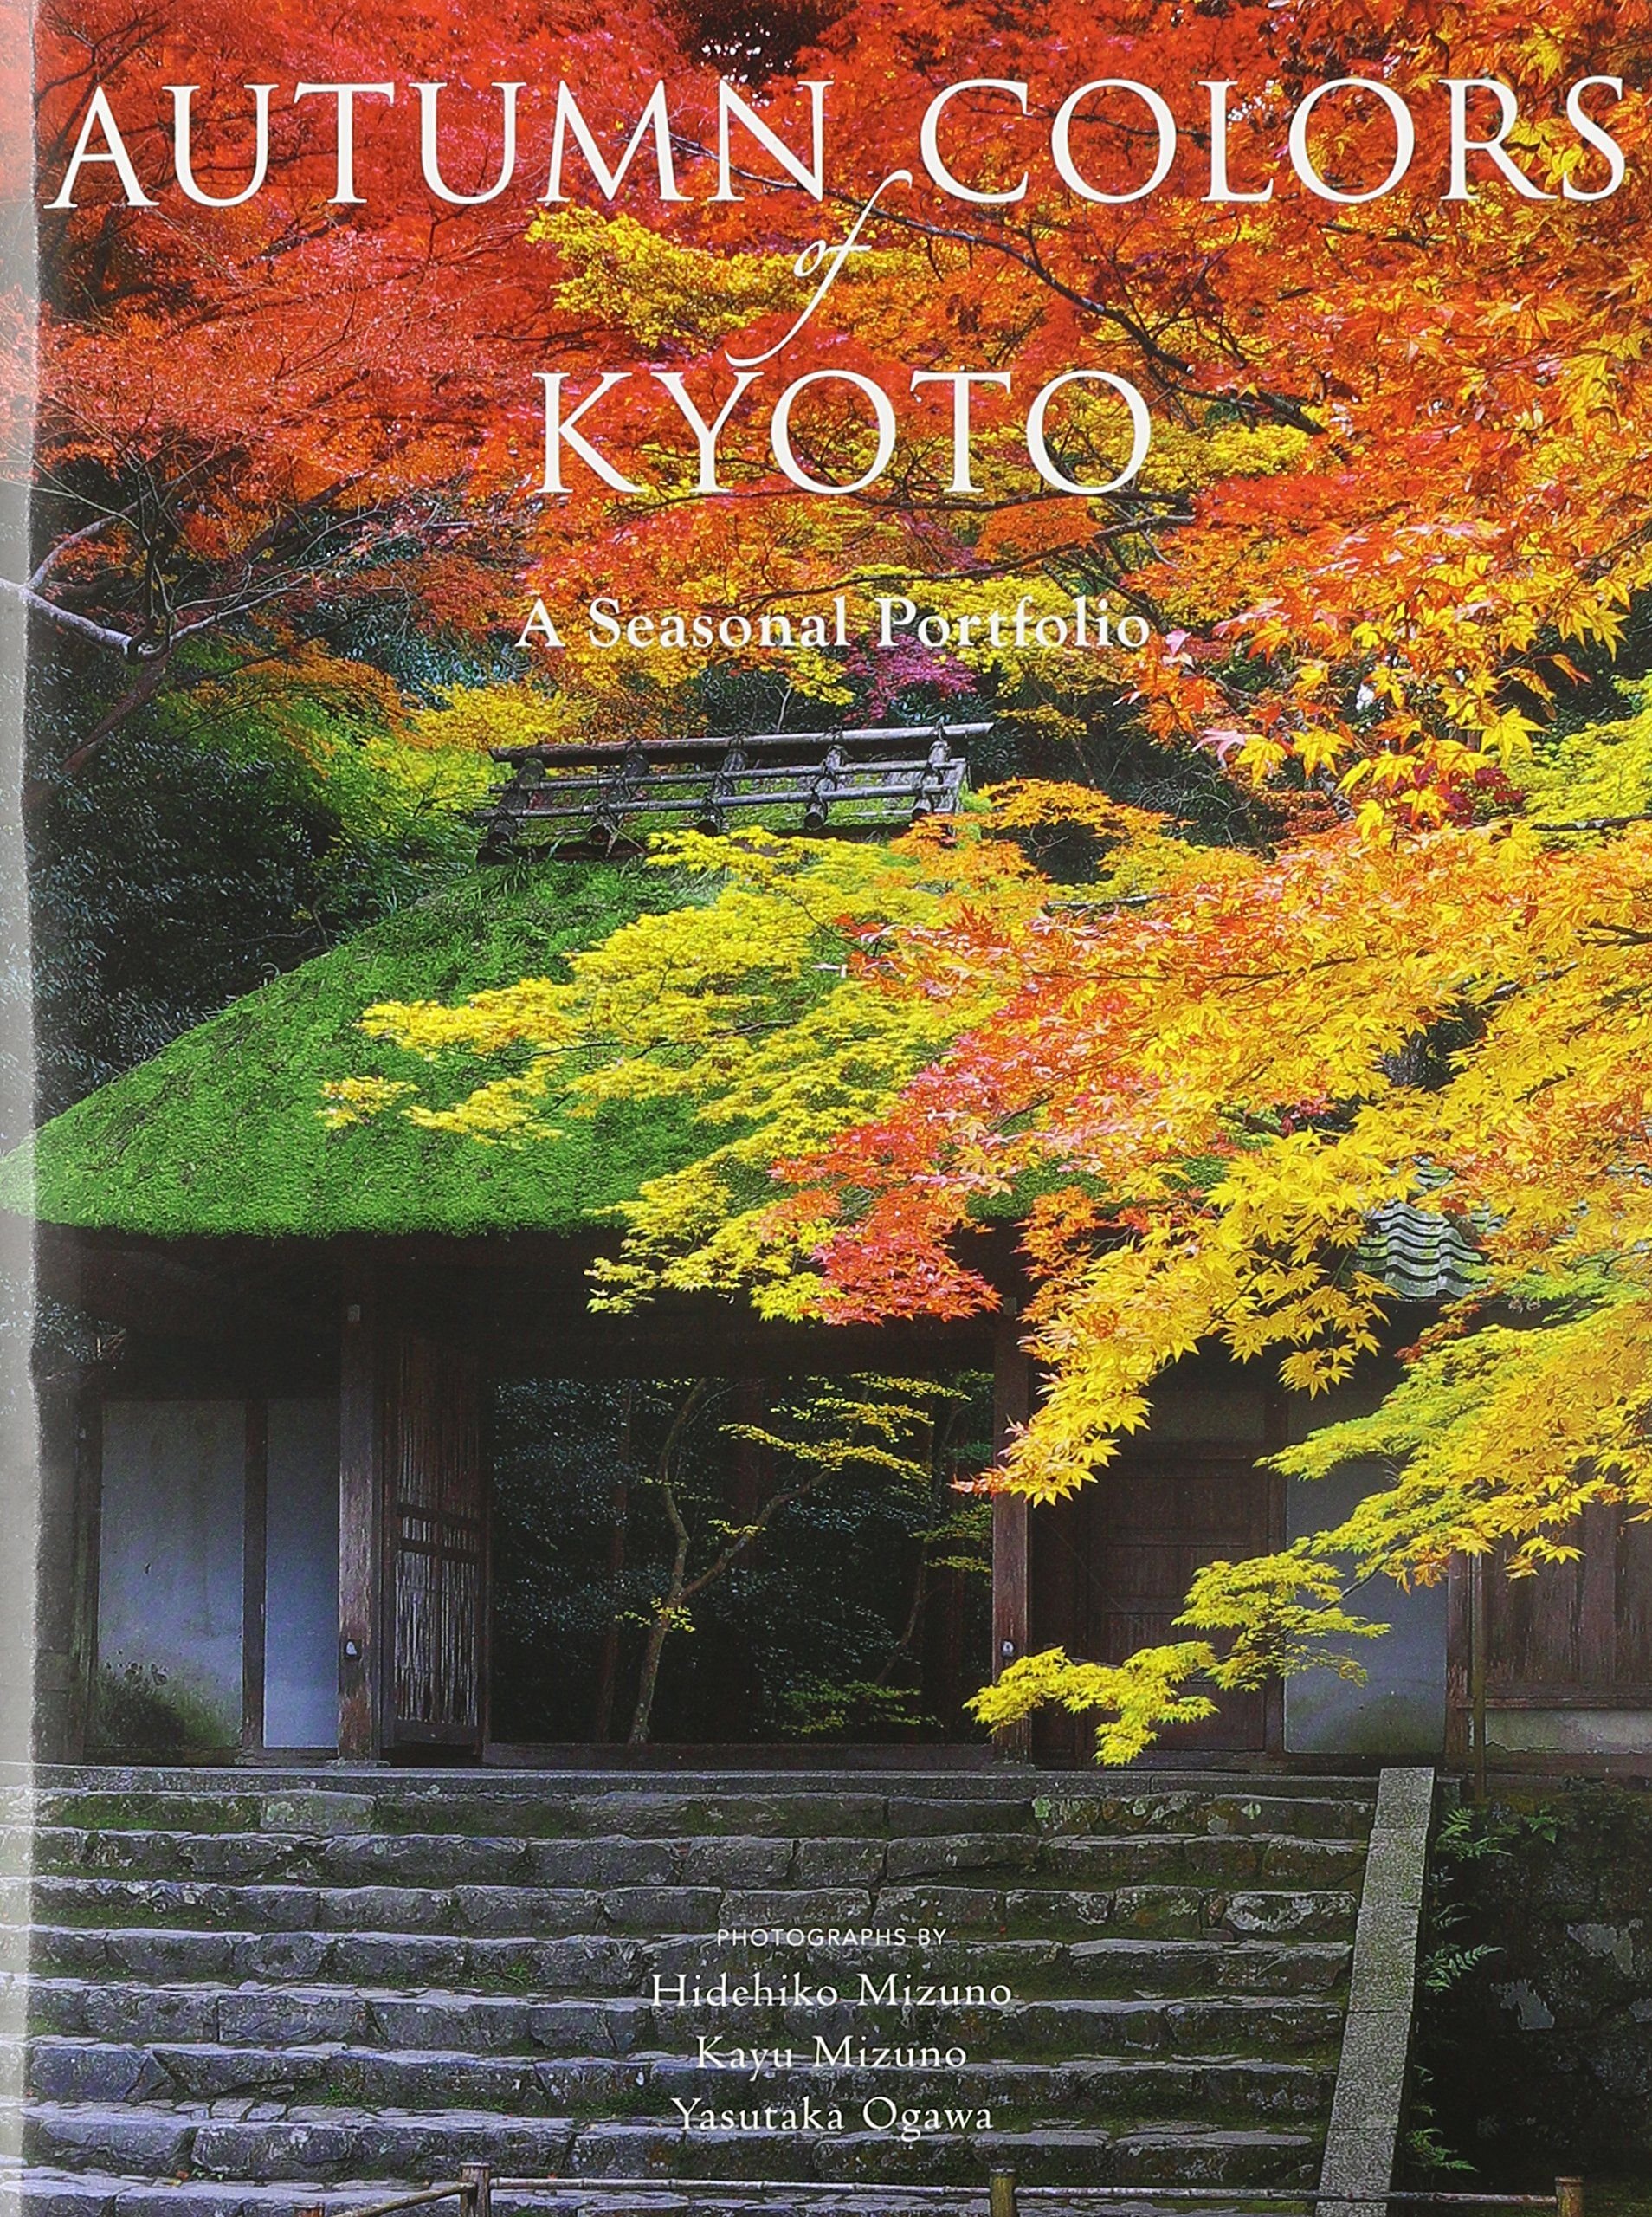 Autumn Colors Of Kyoto: A Seasonal Portfolio